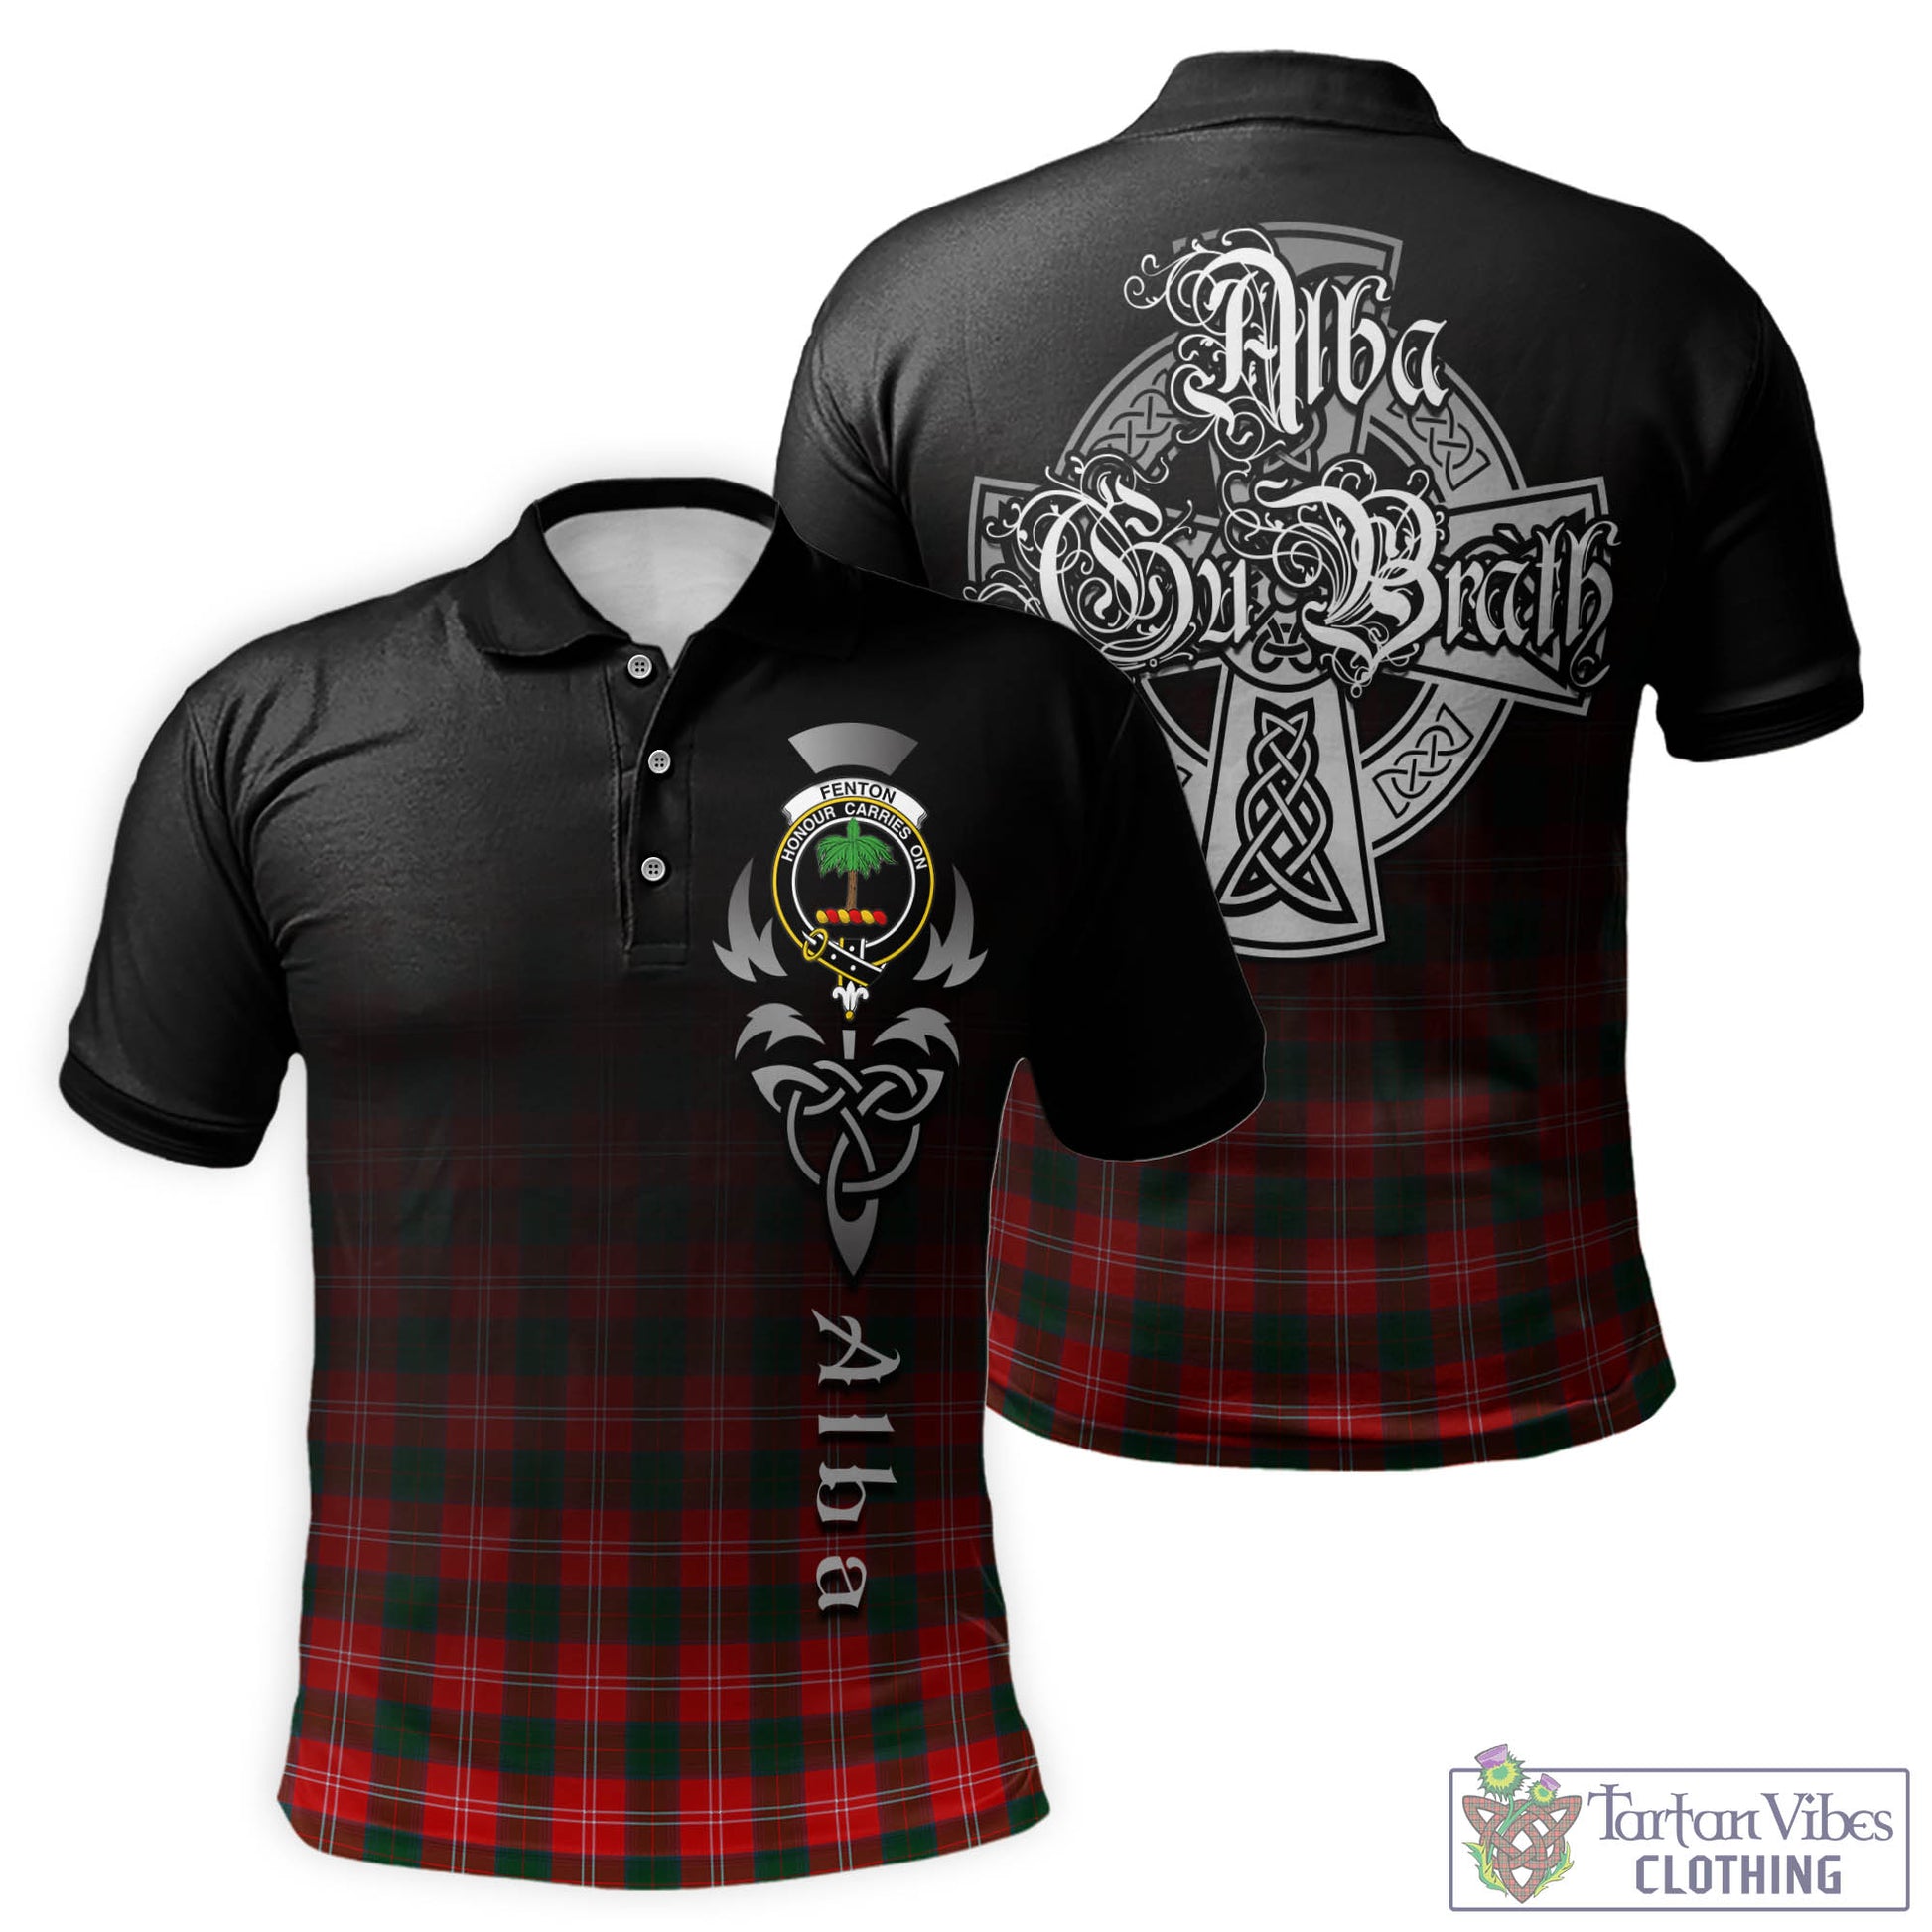 Tartan Vibes Clothing Fenton Tartan Polo Shirt Featuring Alba Gu Brath Family Crest Celtic Inspired